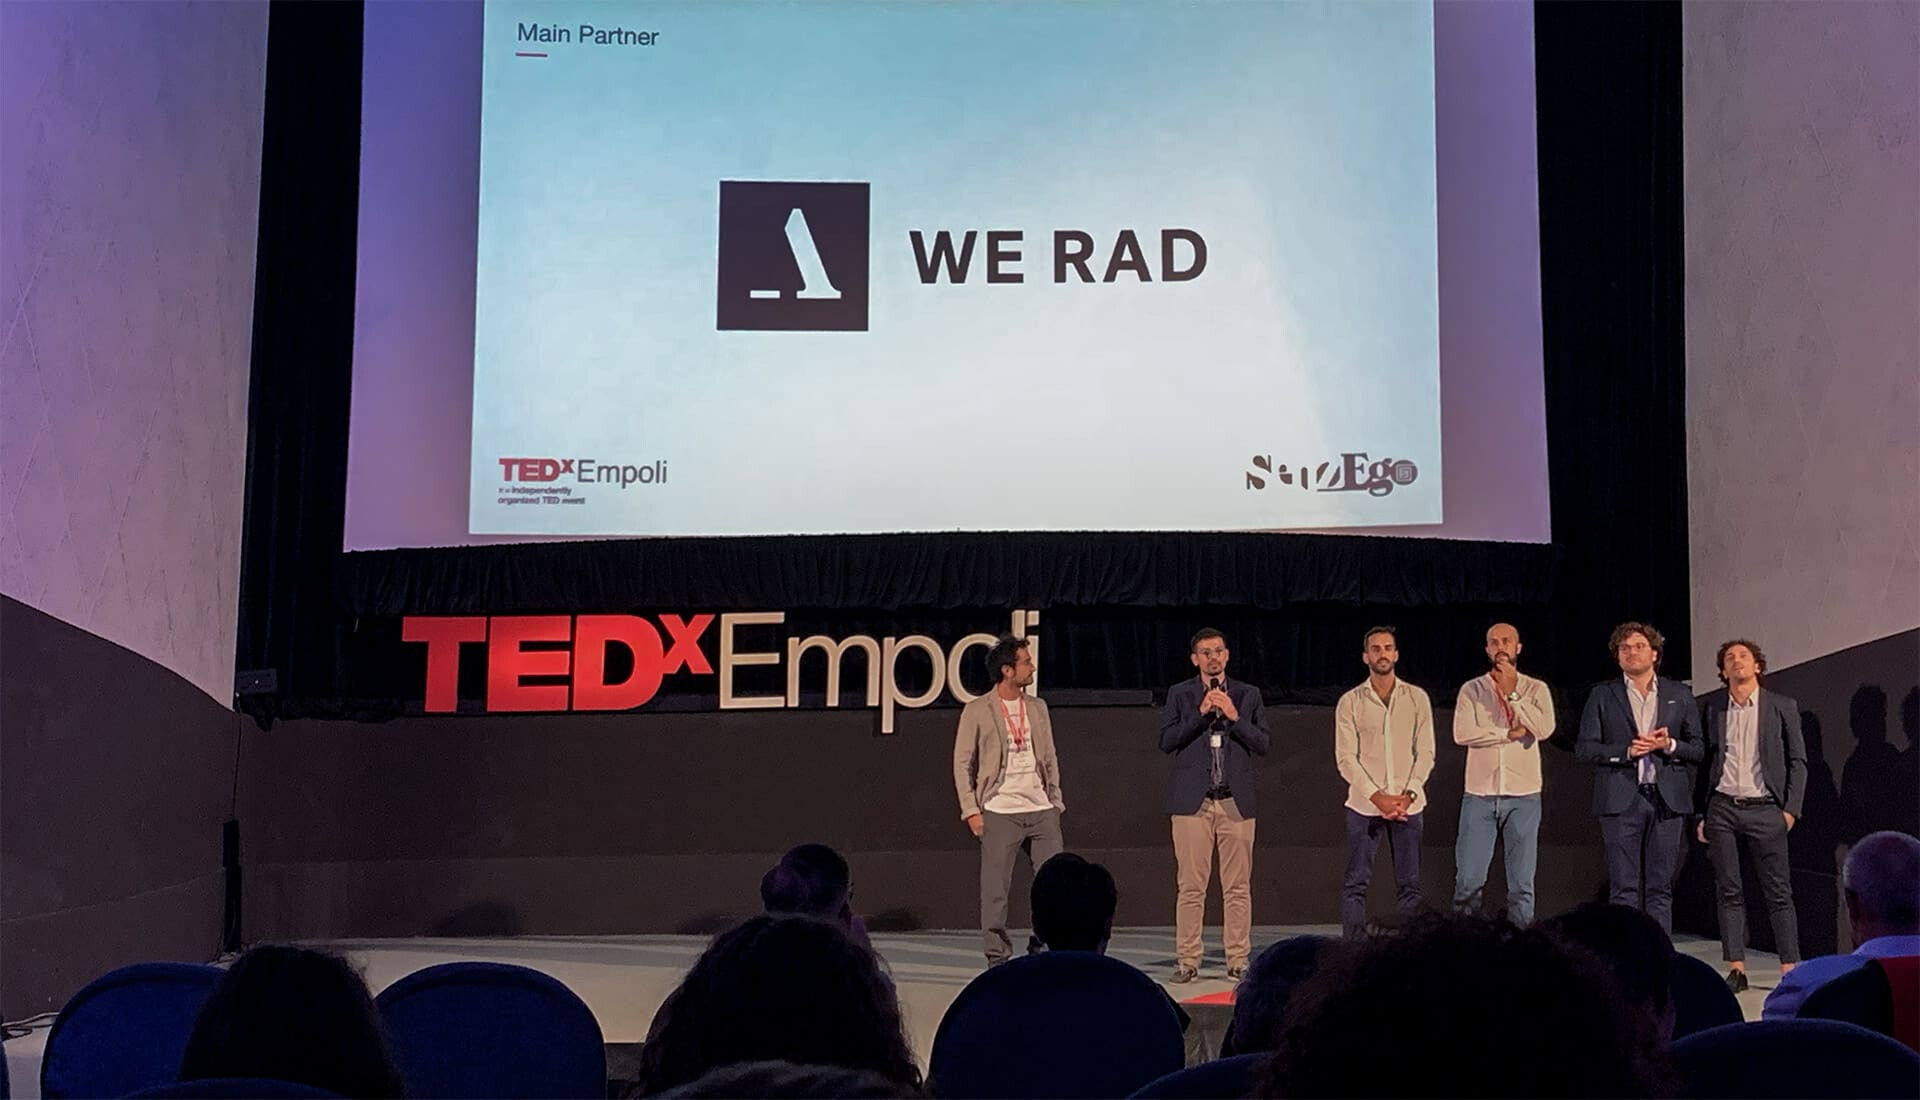 Werad Brand Mainsponsor Tedx